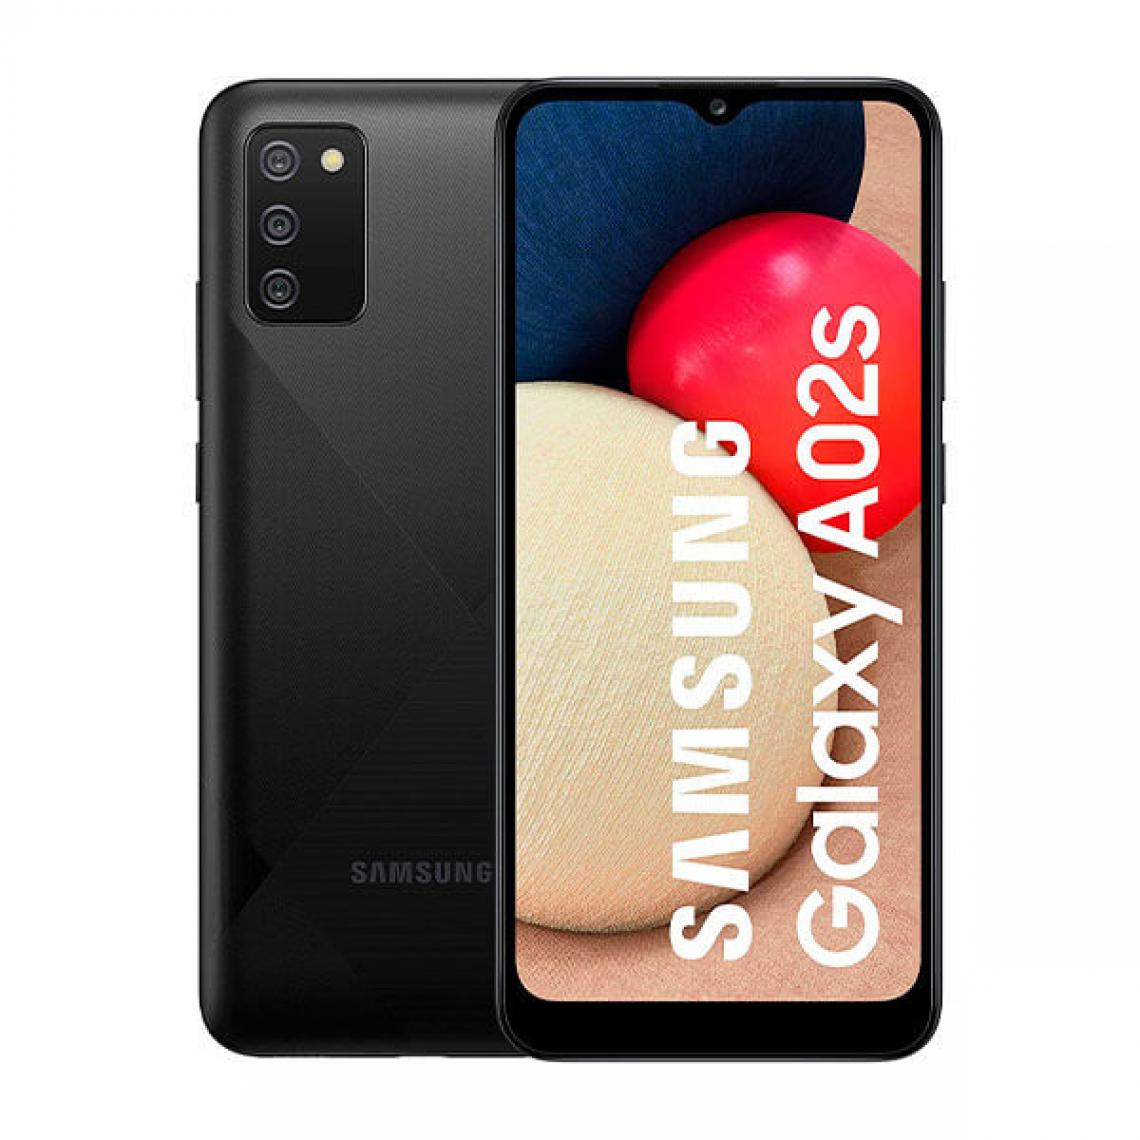 Samsung - Samsung Galaxy A02s 3Go/32Go Noir (Black) Dual SIM - Smartphone Android